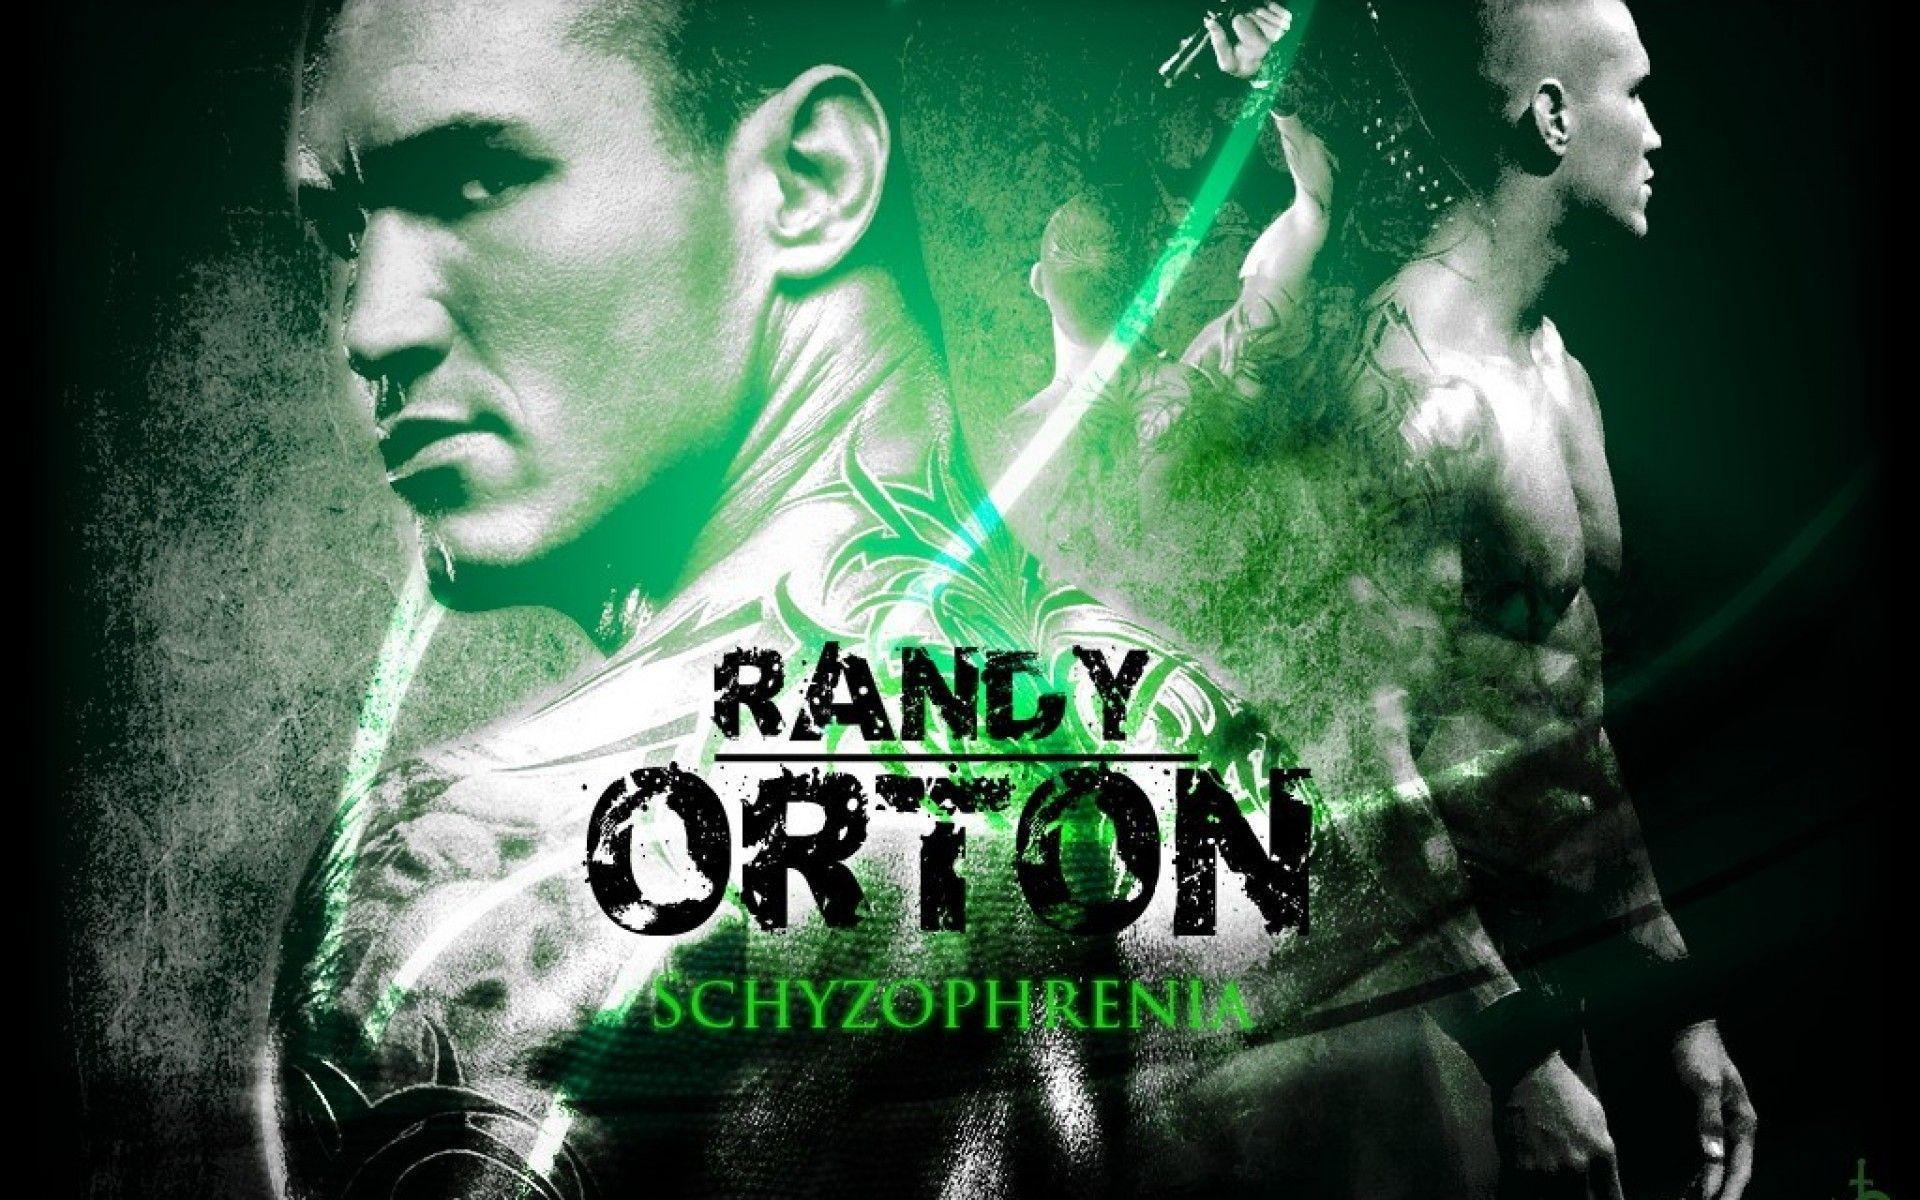 Randy Orton Wallpaper Viper